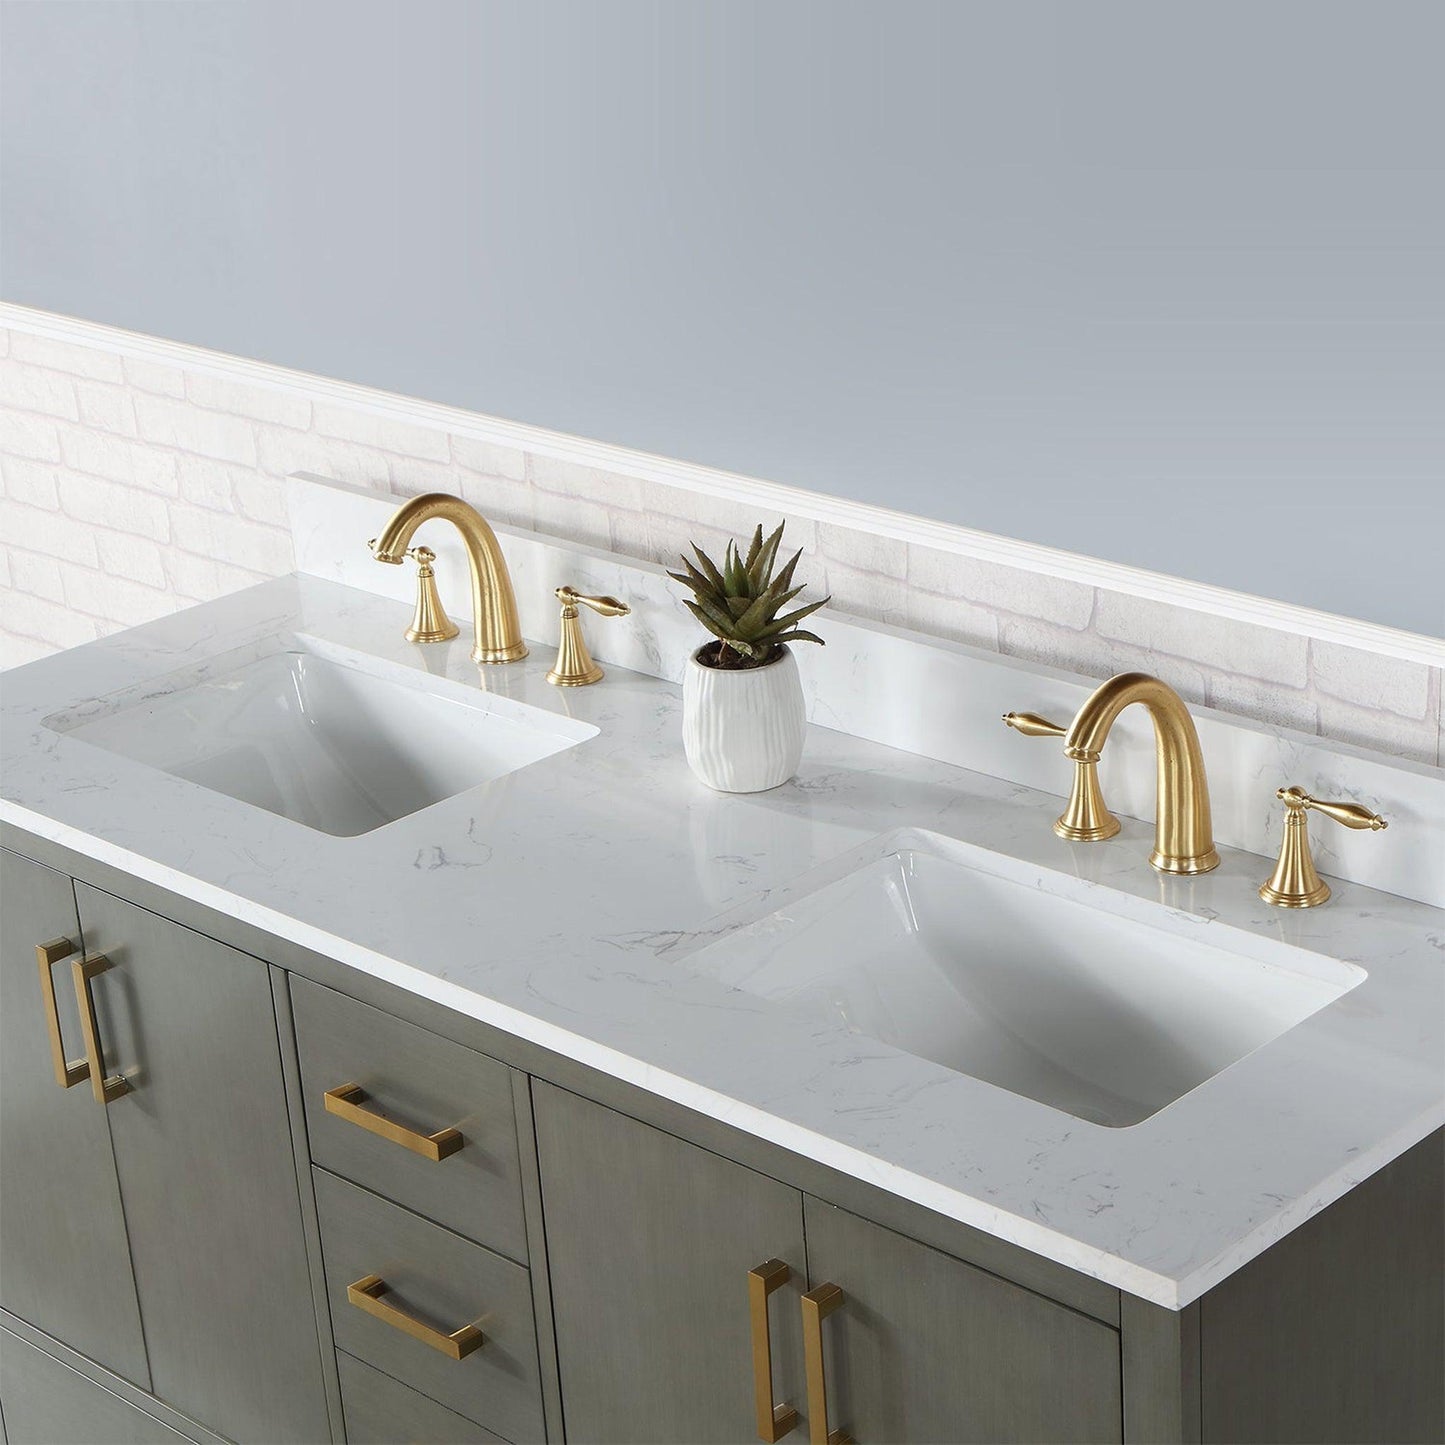 Altair Monna 60" Gray Pine Freestanding Double Bathroom Vanity Set With Aosta White Composite Stone Top, Two Rectangular Undermount Ceramic Sinks, Overflow, and Backsplash